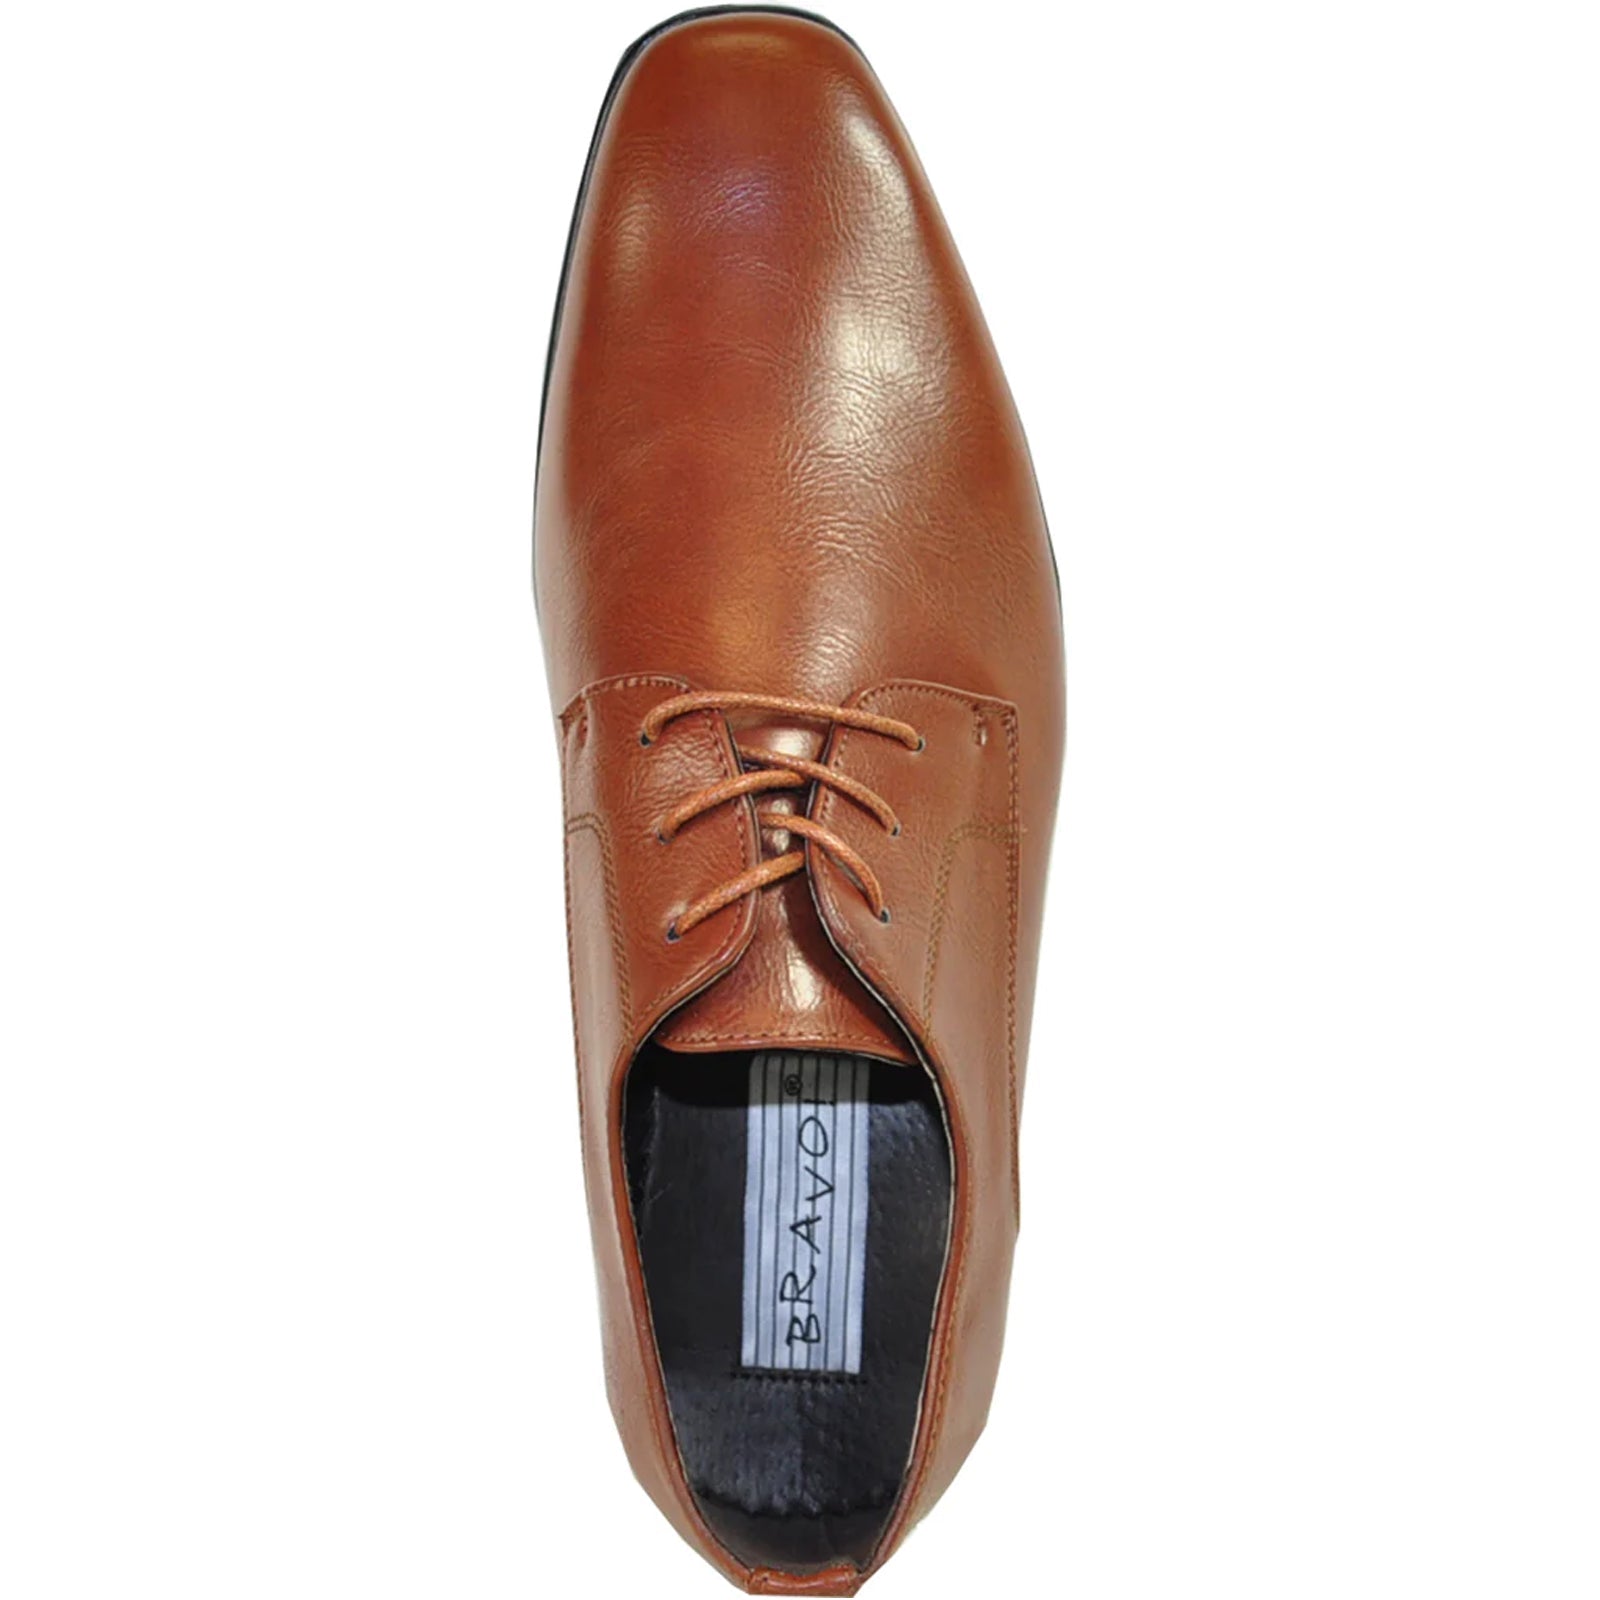 "Brown Oxford Dress Shoe - Men's Pointed Plain Toe Style"